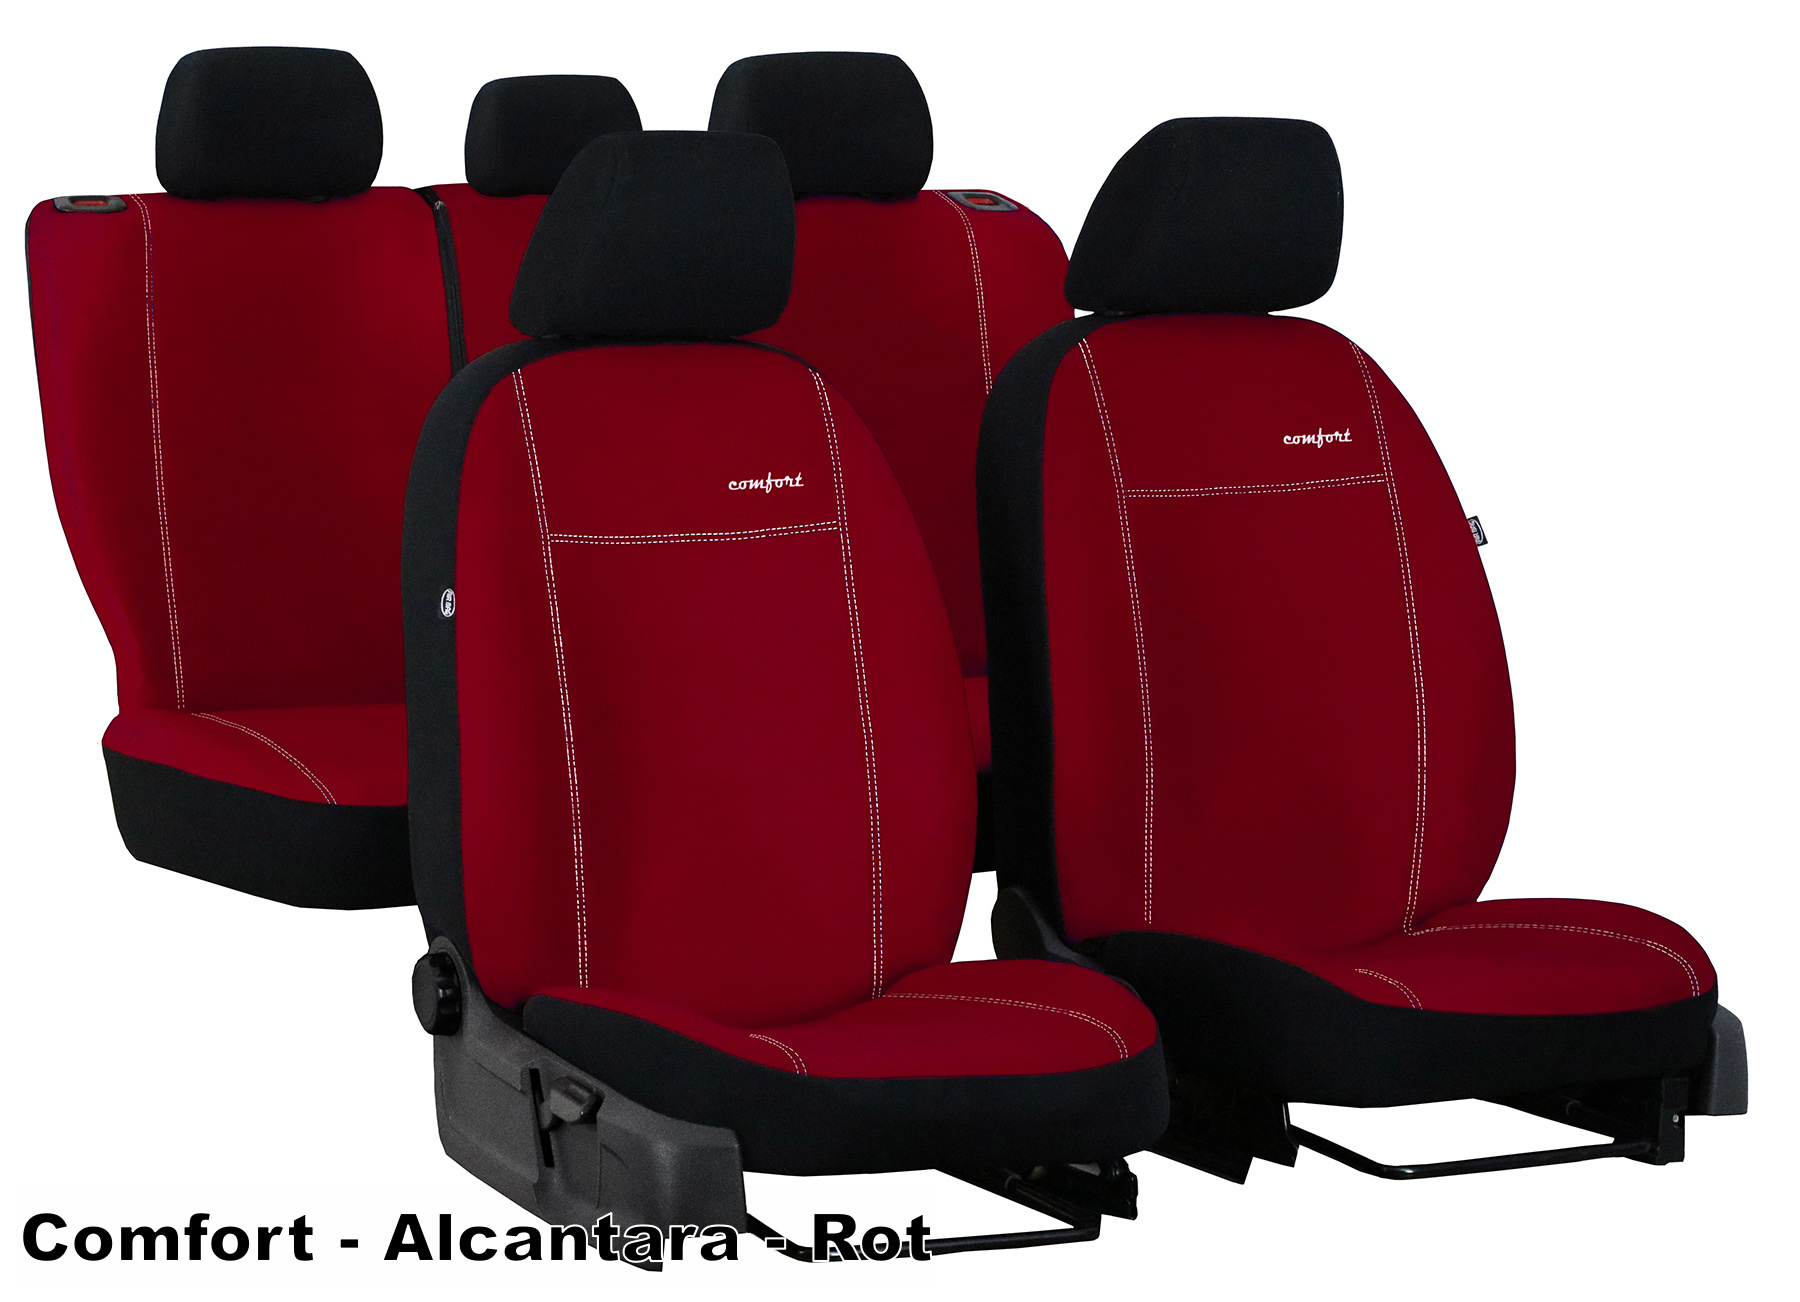 Maßgefertigter Sitzbezug Exclusive für Ford B-Max C-Max S-Max